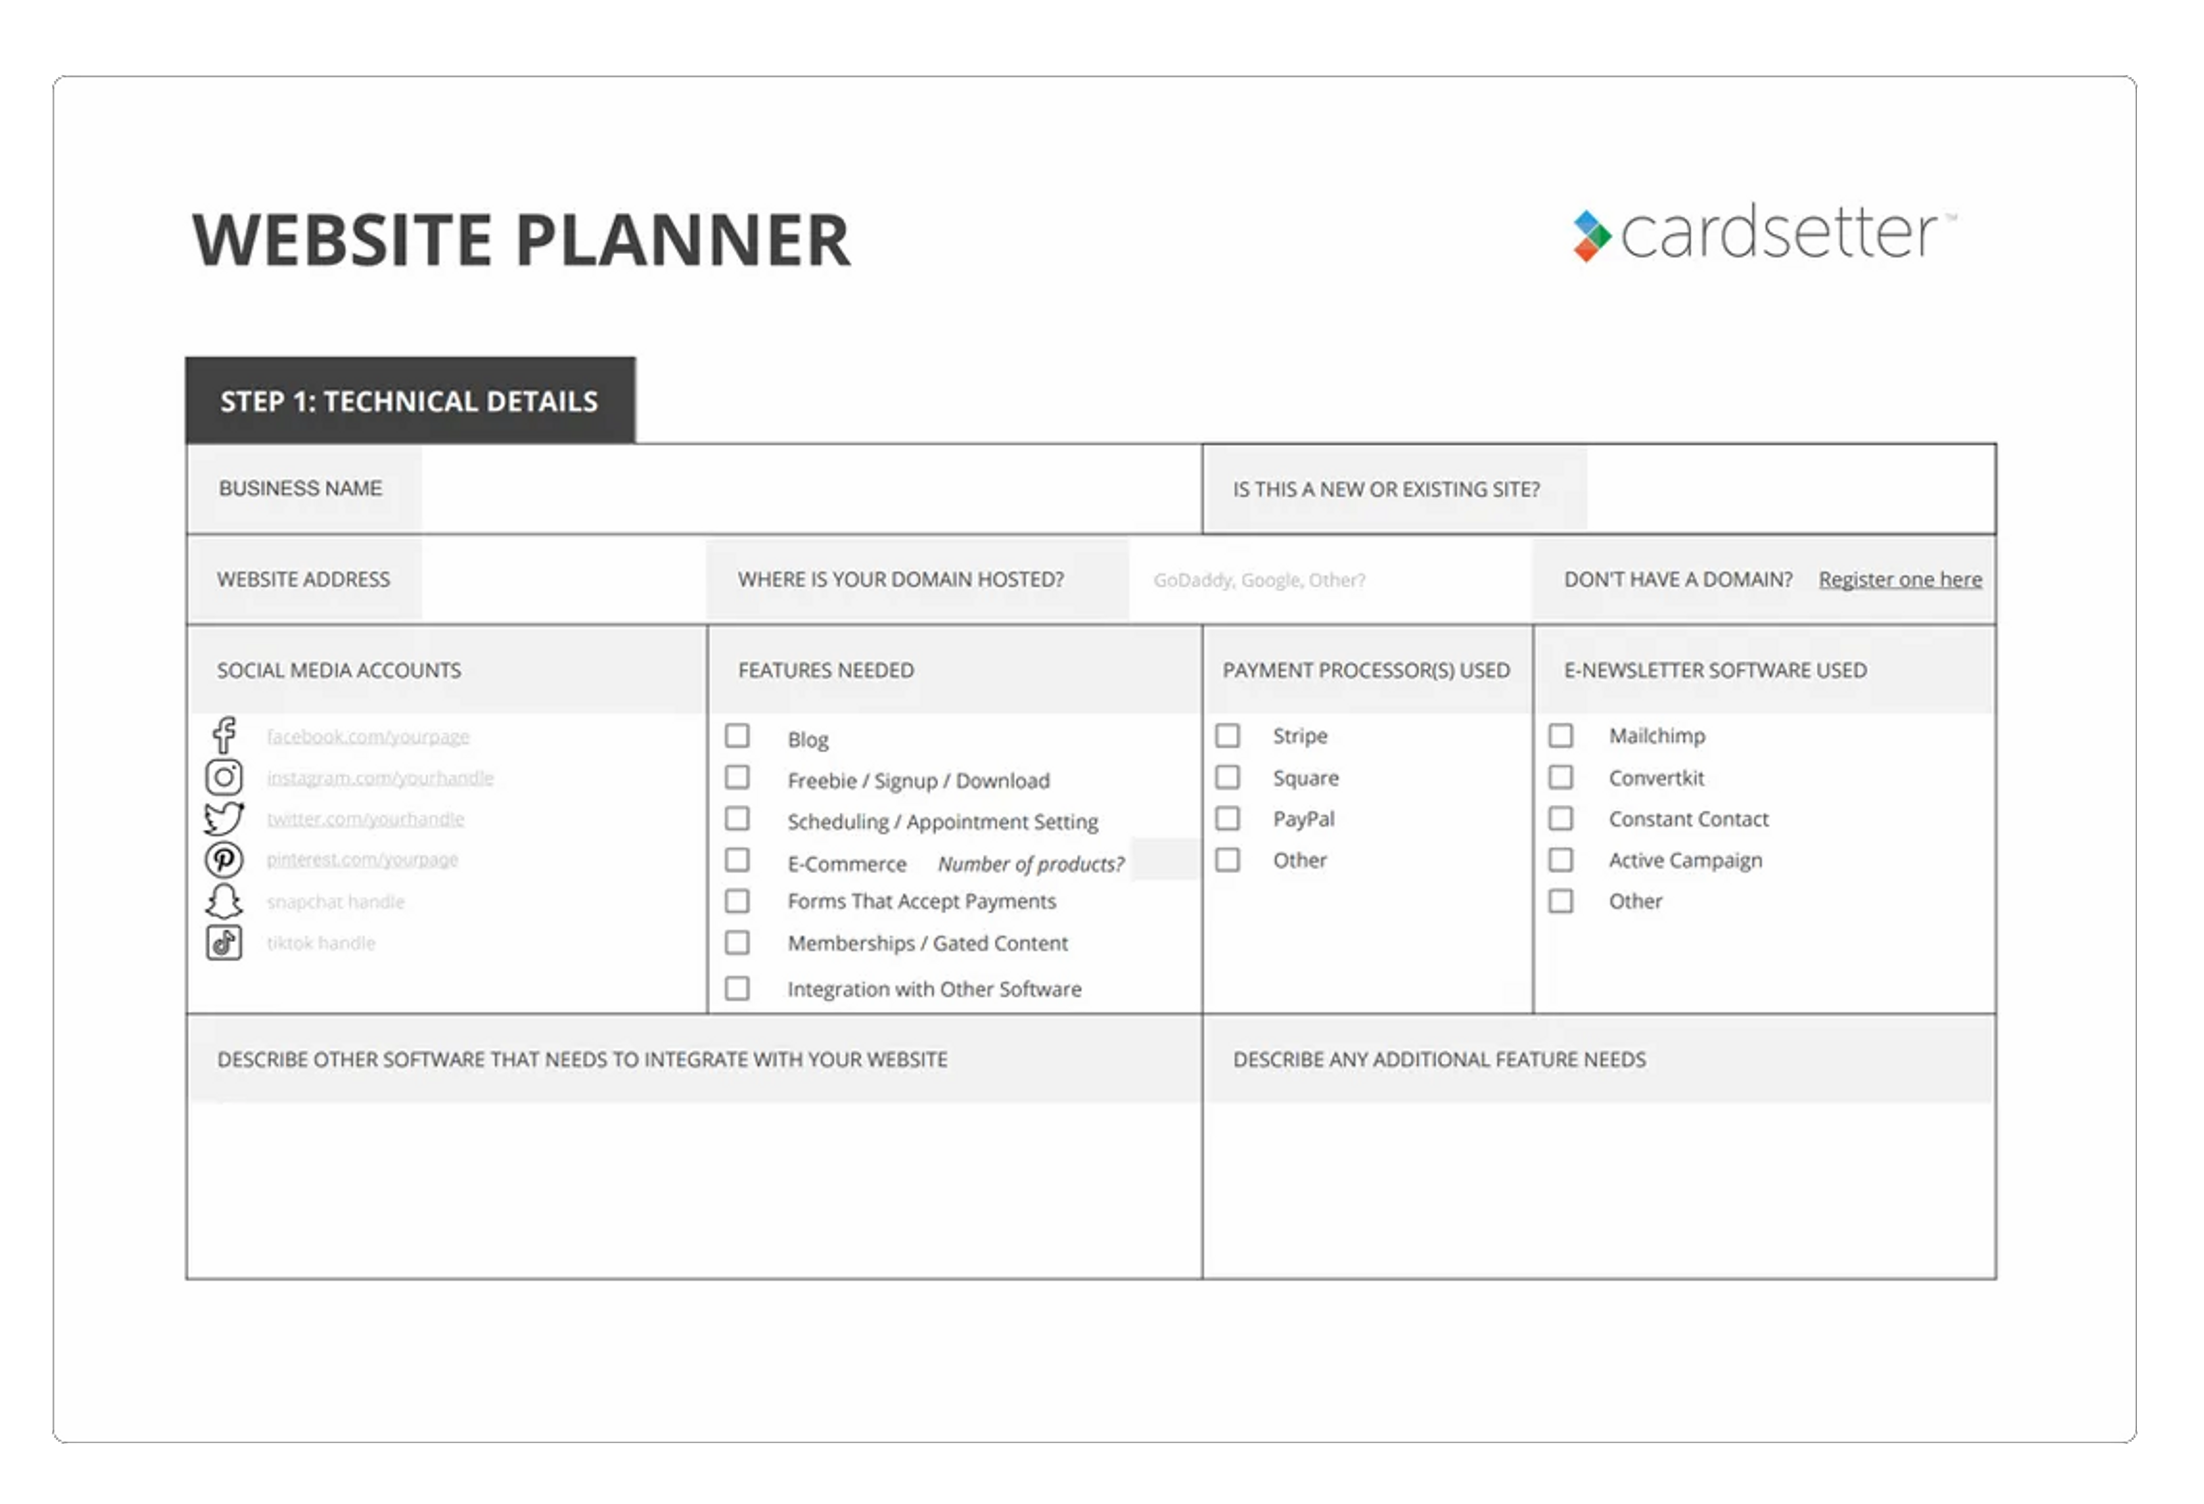 website planner workbook